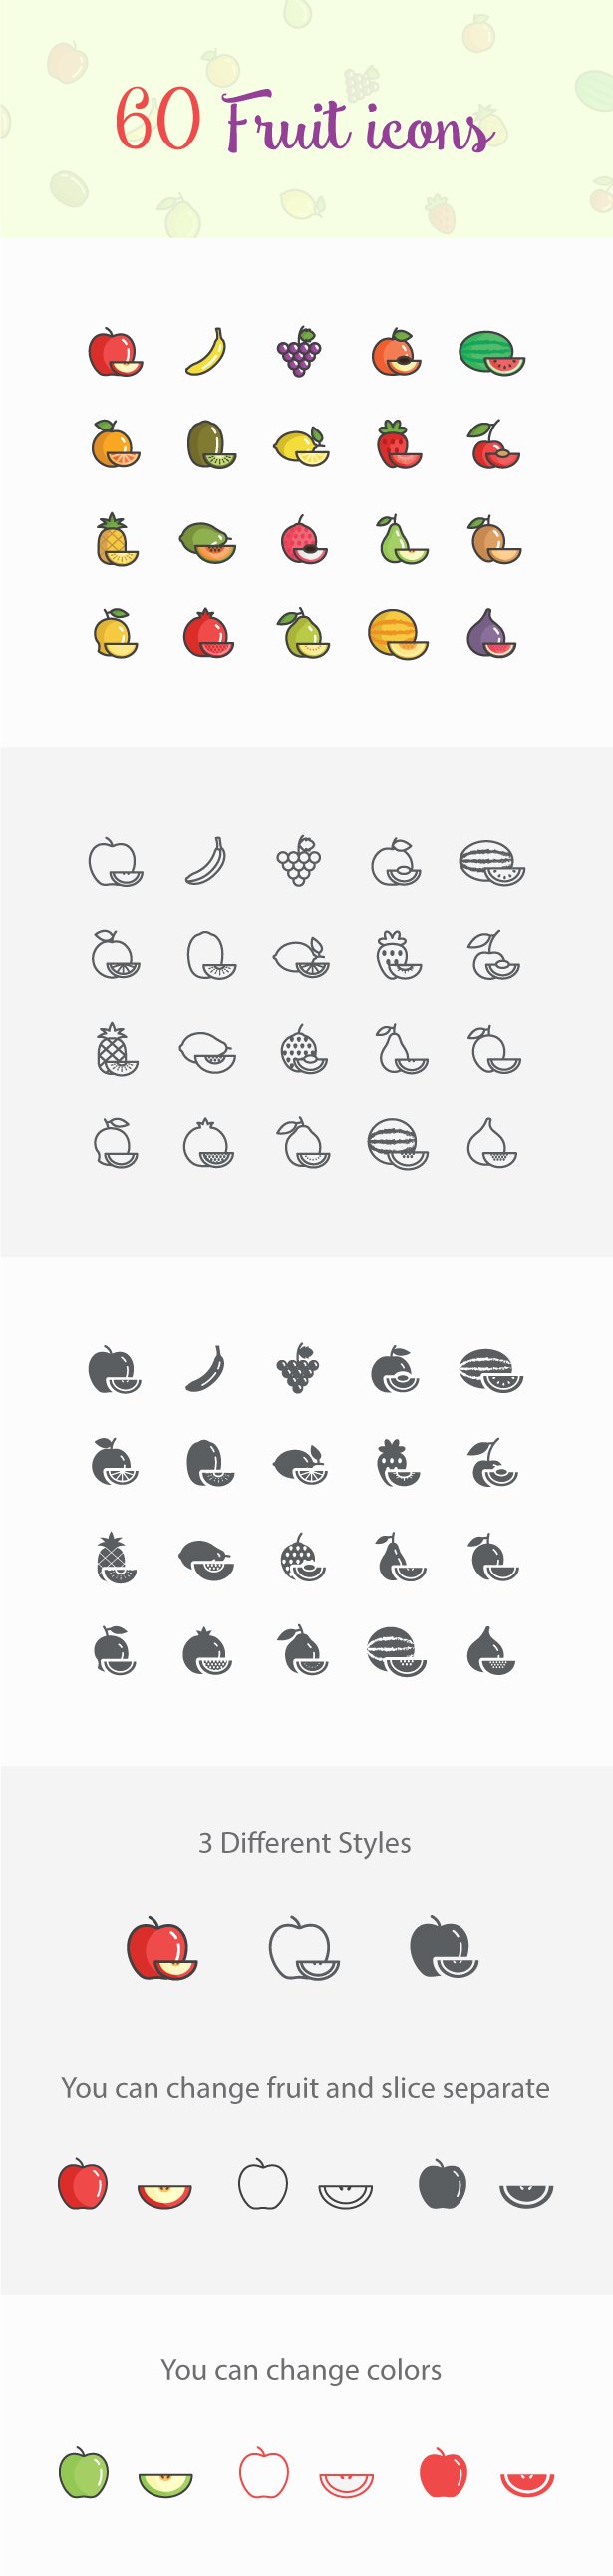 3 Styles Fruit Icons